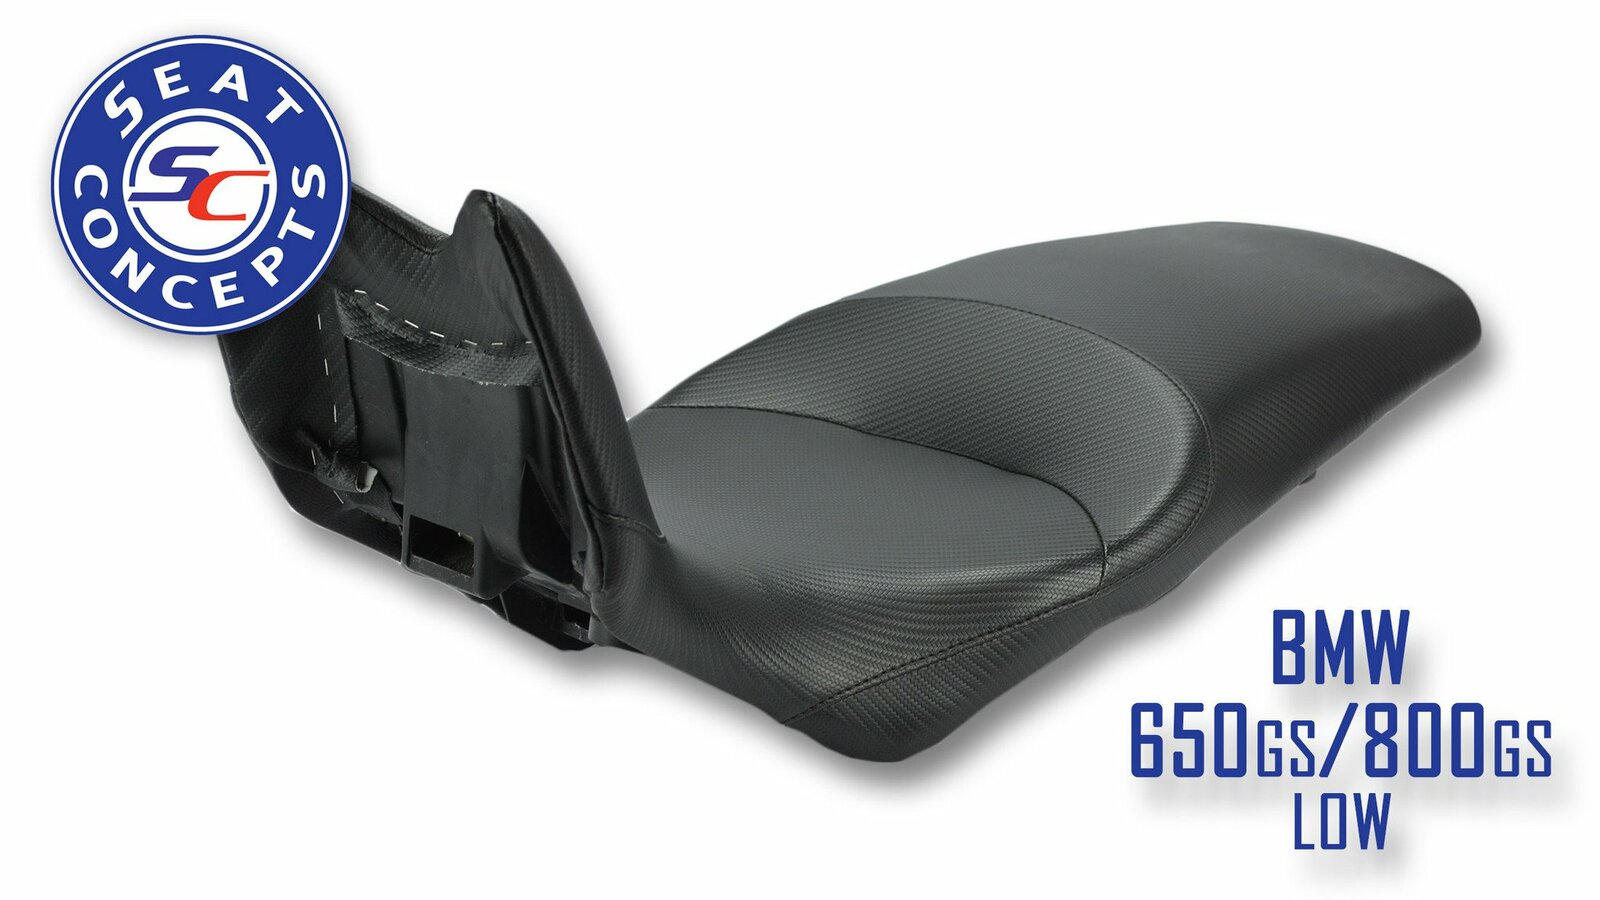 Seat Concepts Bmw F650gs F700gs F800gs Low Adventure Moto Australia